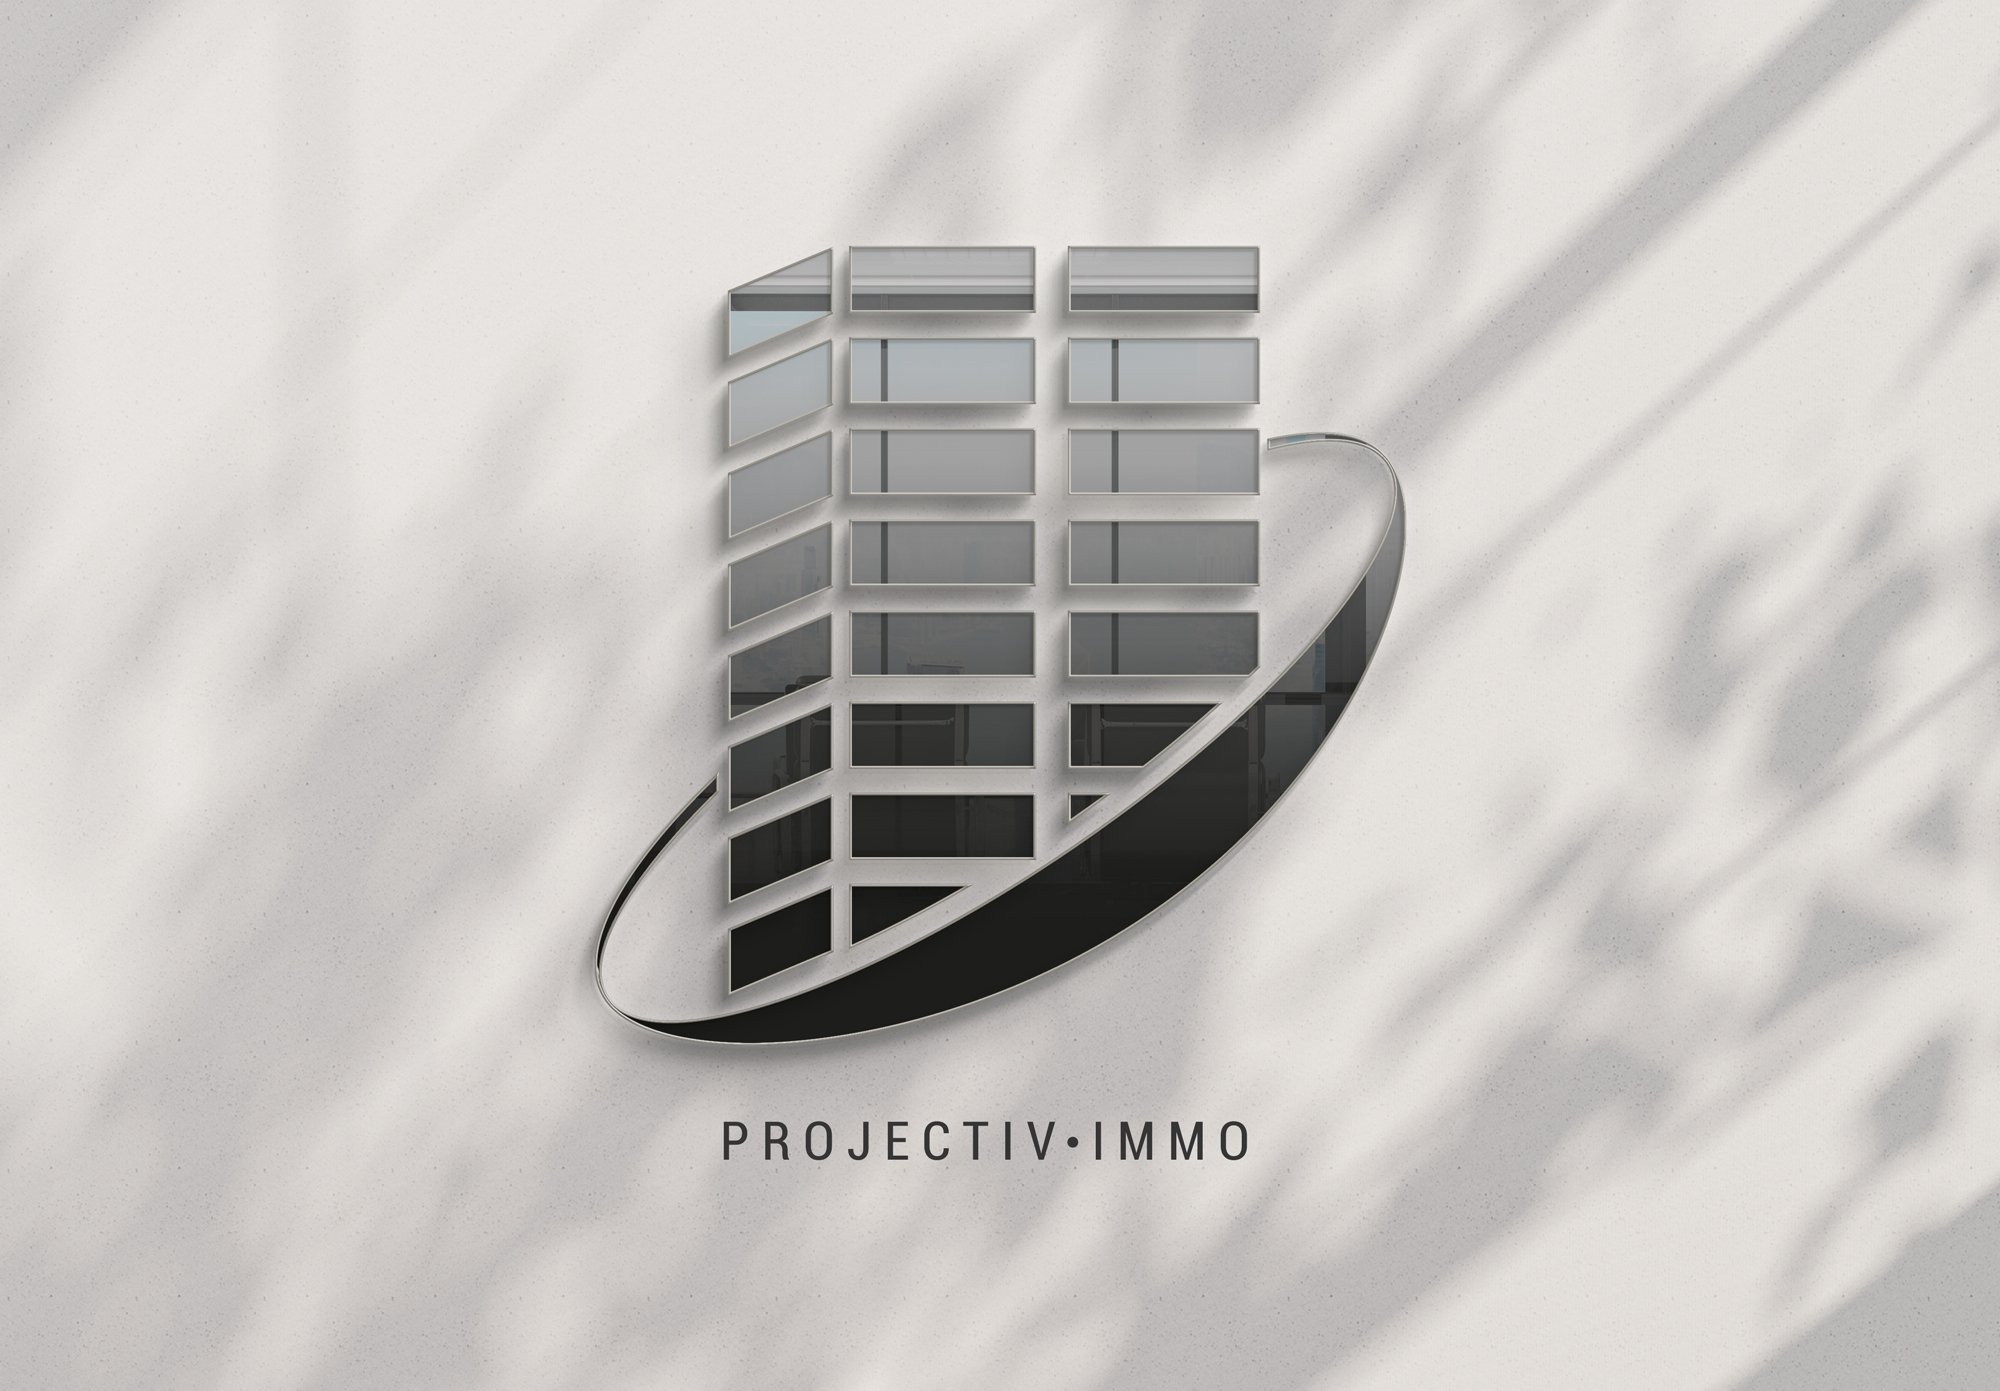 nael cavaglia - Projectiv'immo- logotype illustration, graphisme